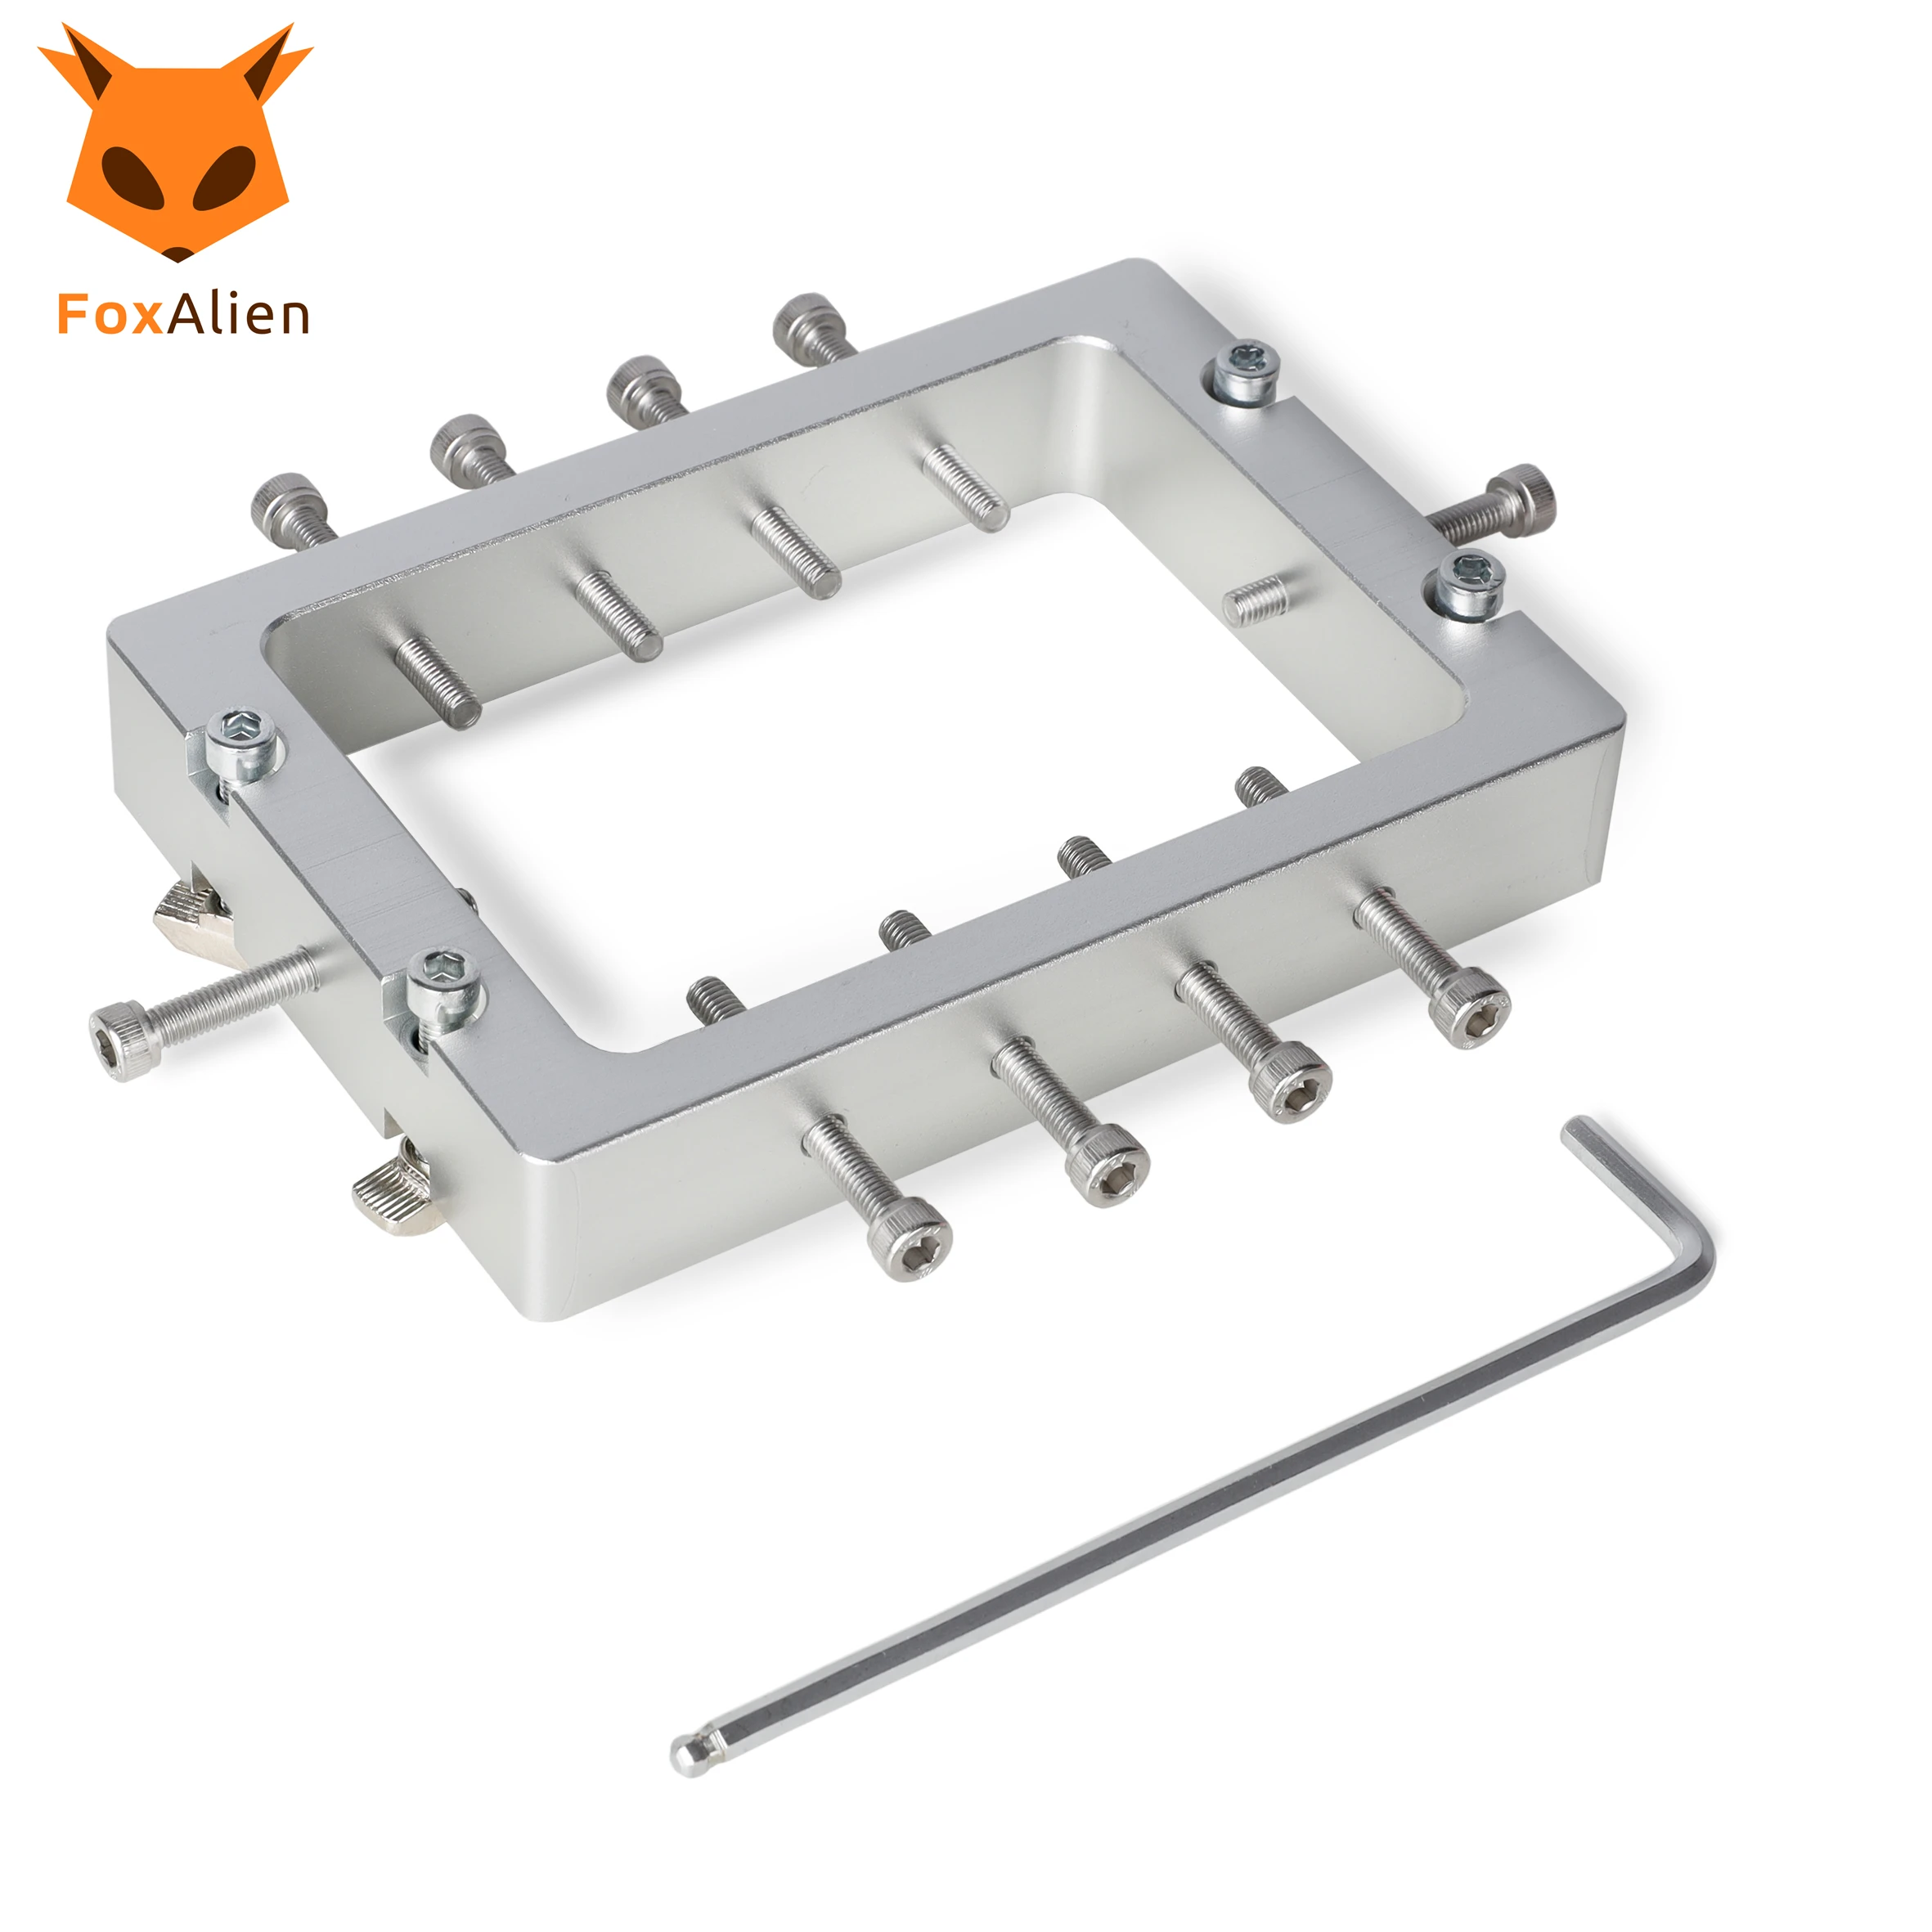 FoxAlien All Aluminum Flip Dowel Jig Kit for CNC Router Machine Milling Worktable, Workholding Clamp Bench Vise for WM3020 3018